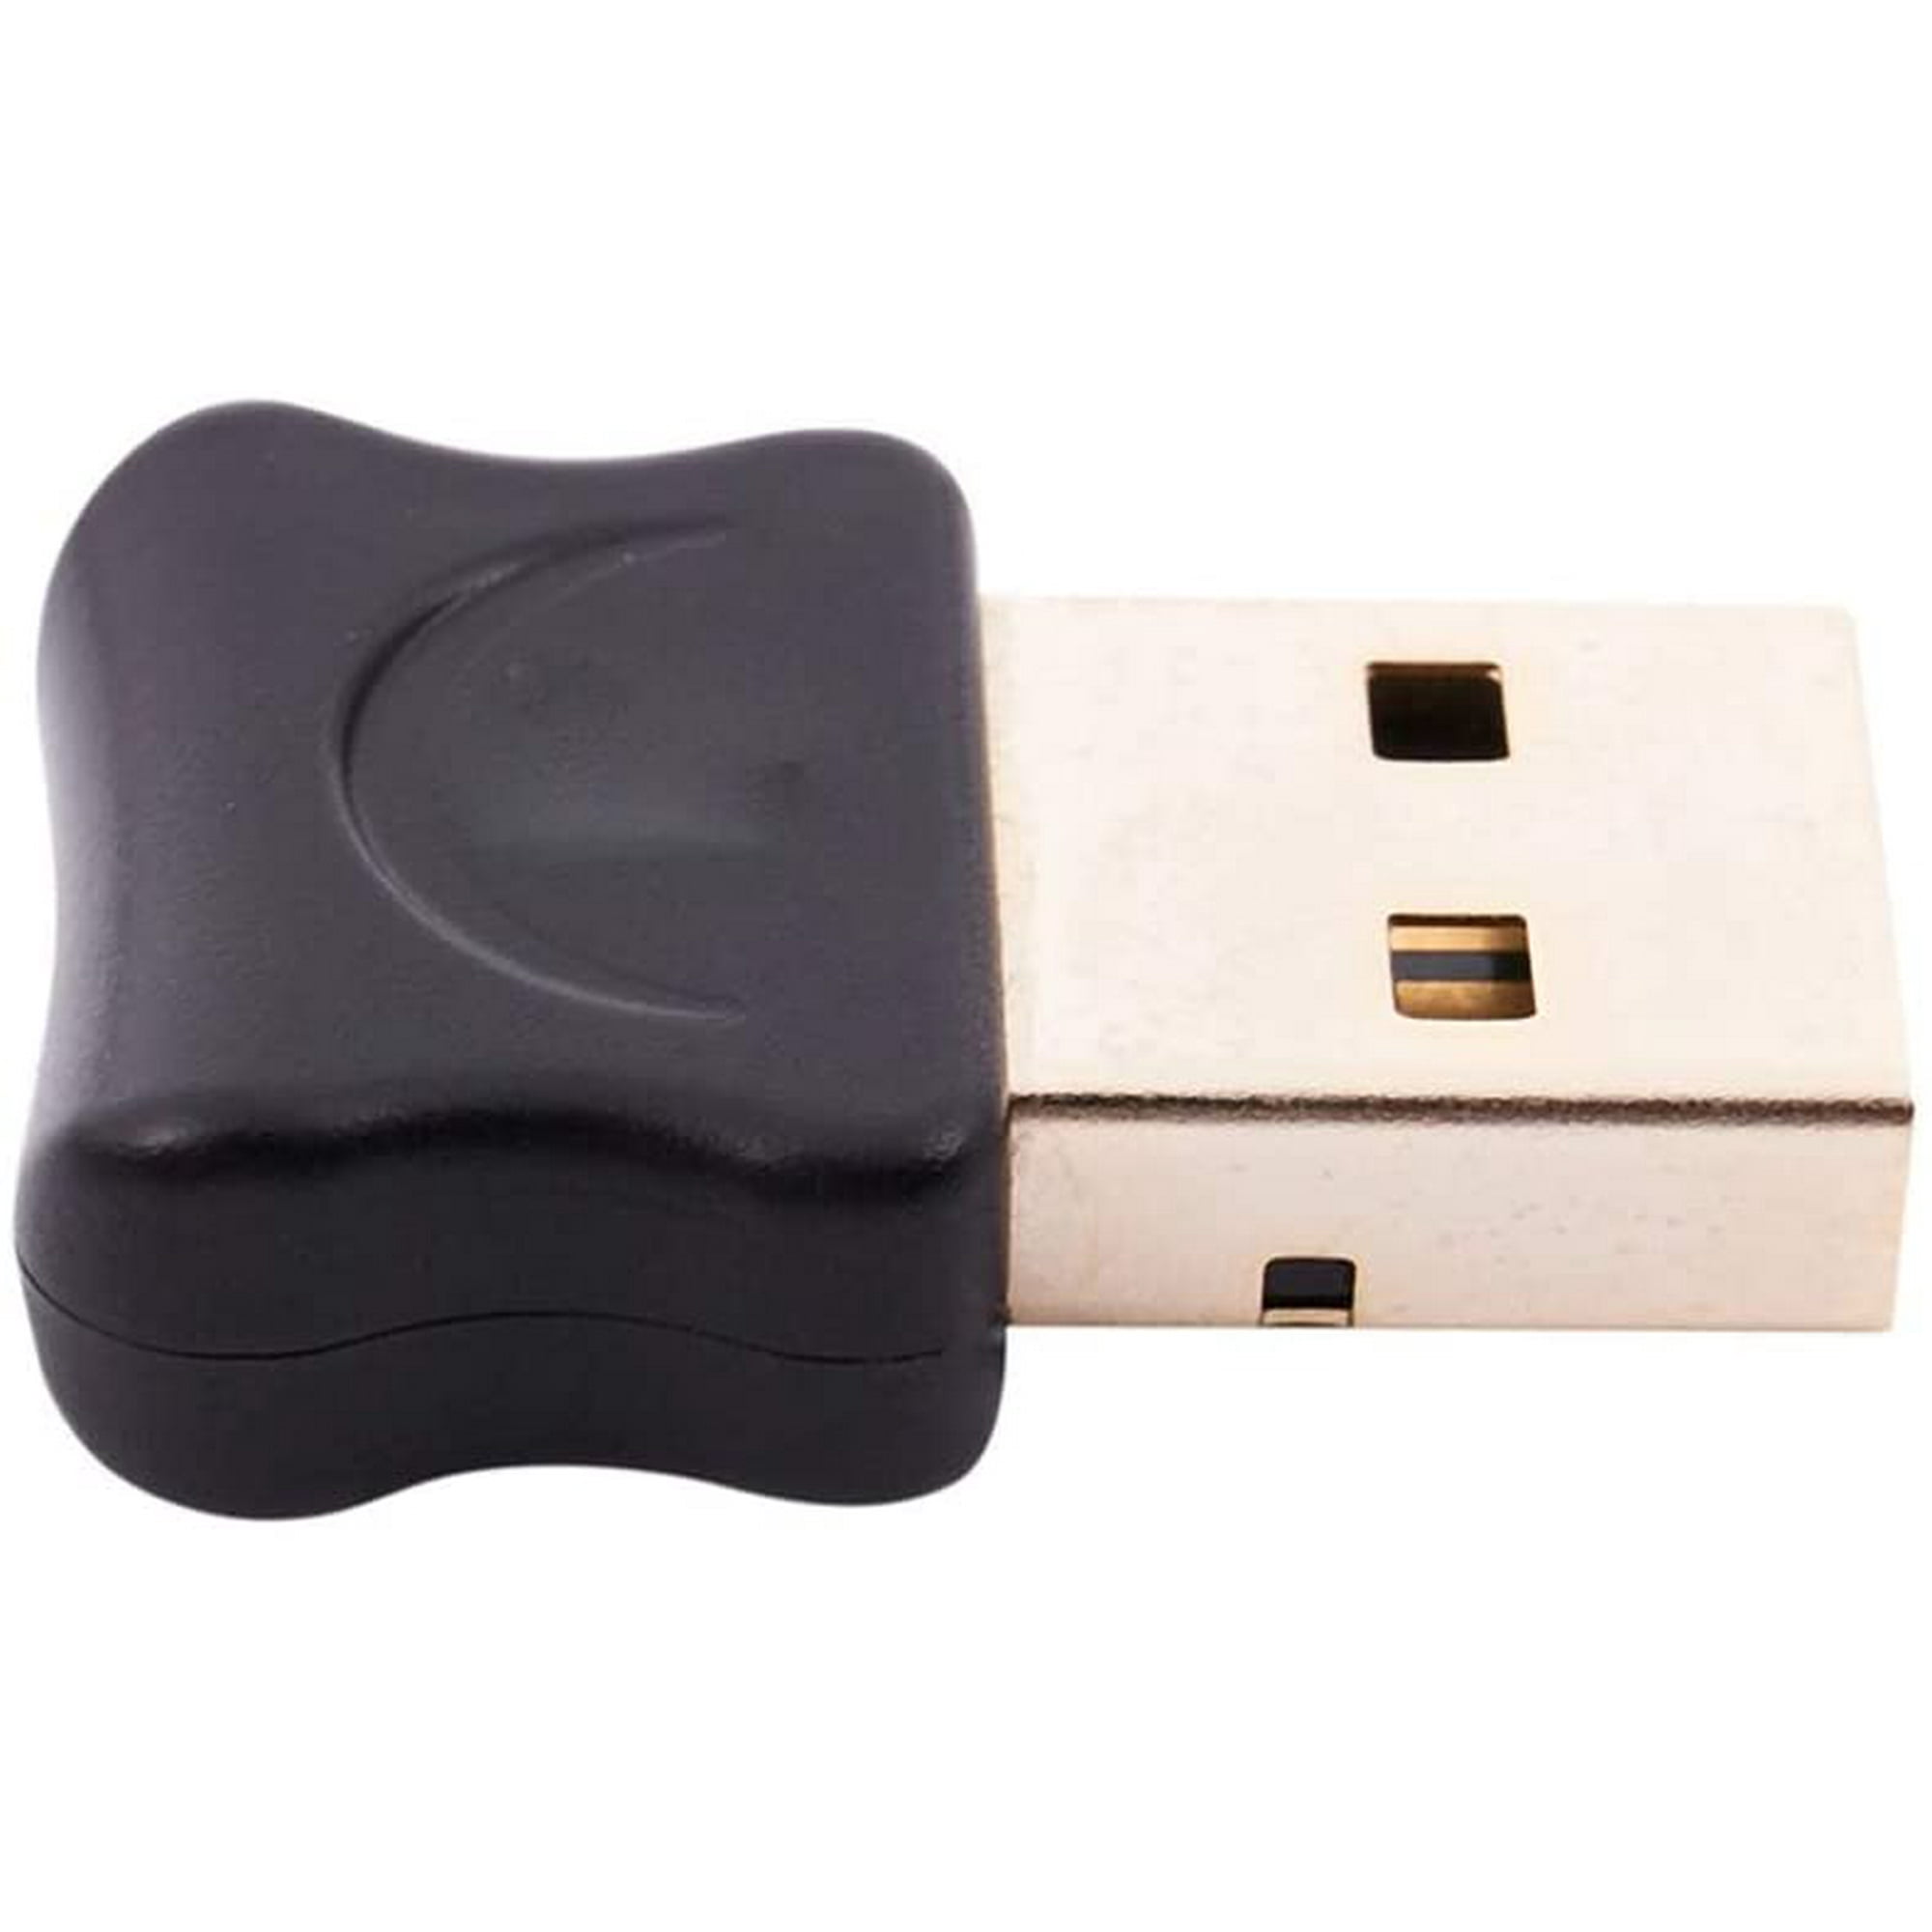 axGear USB 2.0 Bluetooth Dongle Ver 5.0 Wireless Adapter Cordless for Laptop PC Desktop 